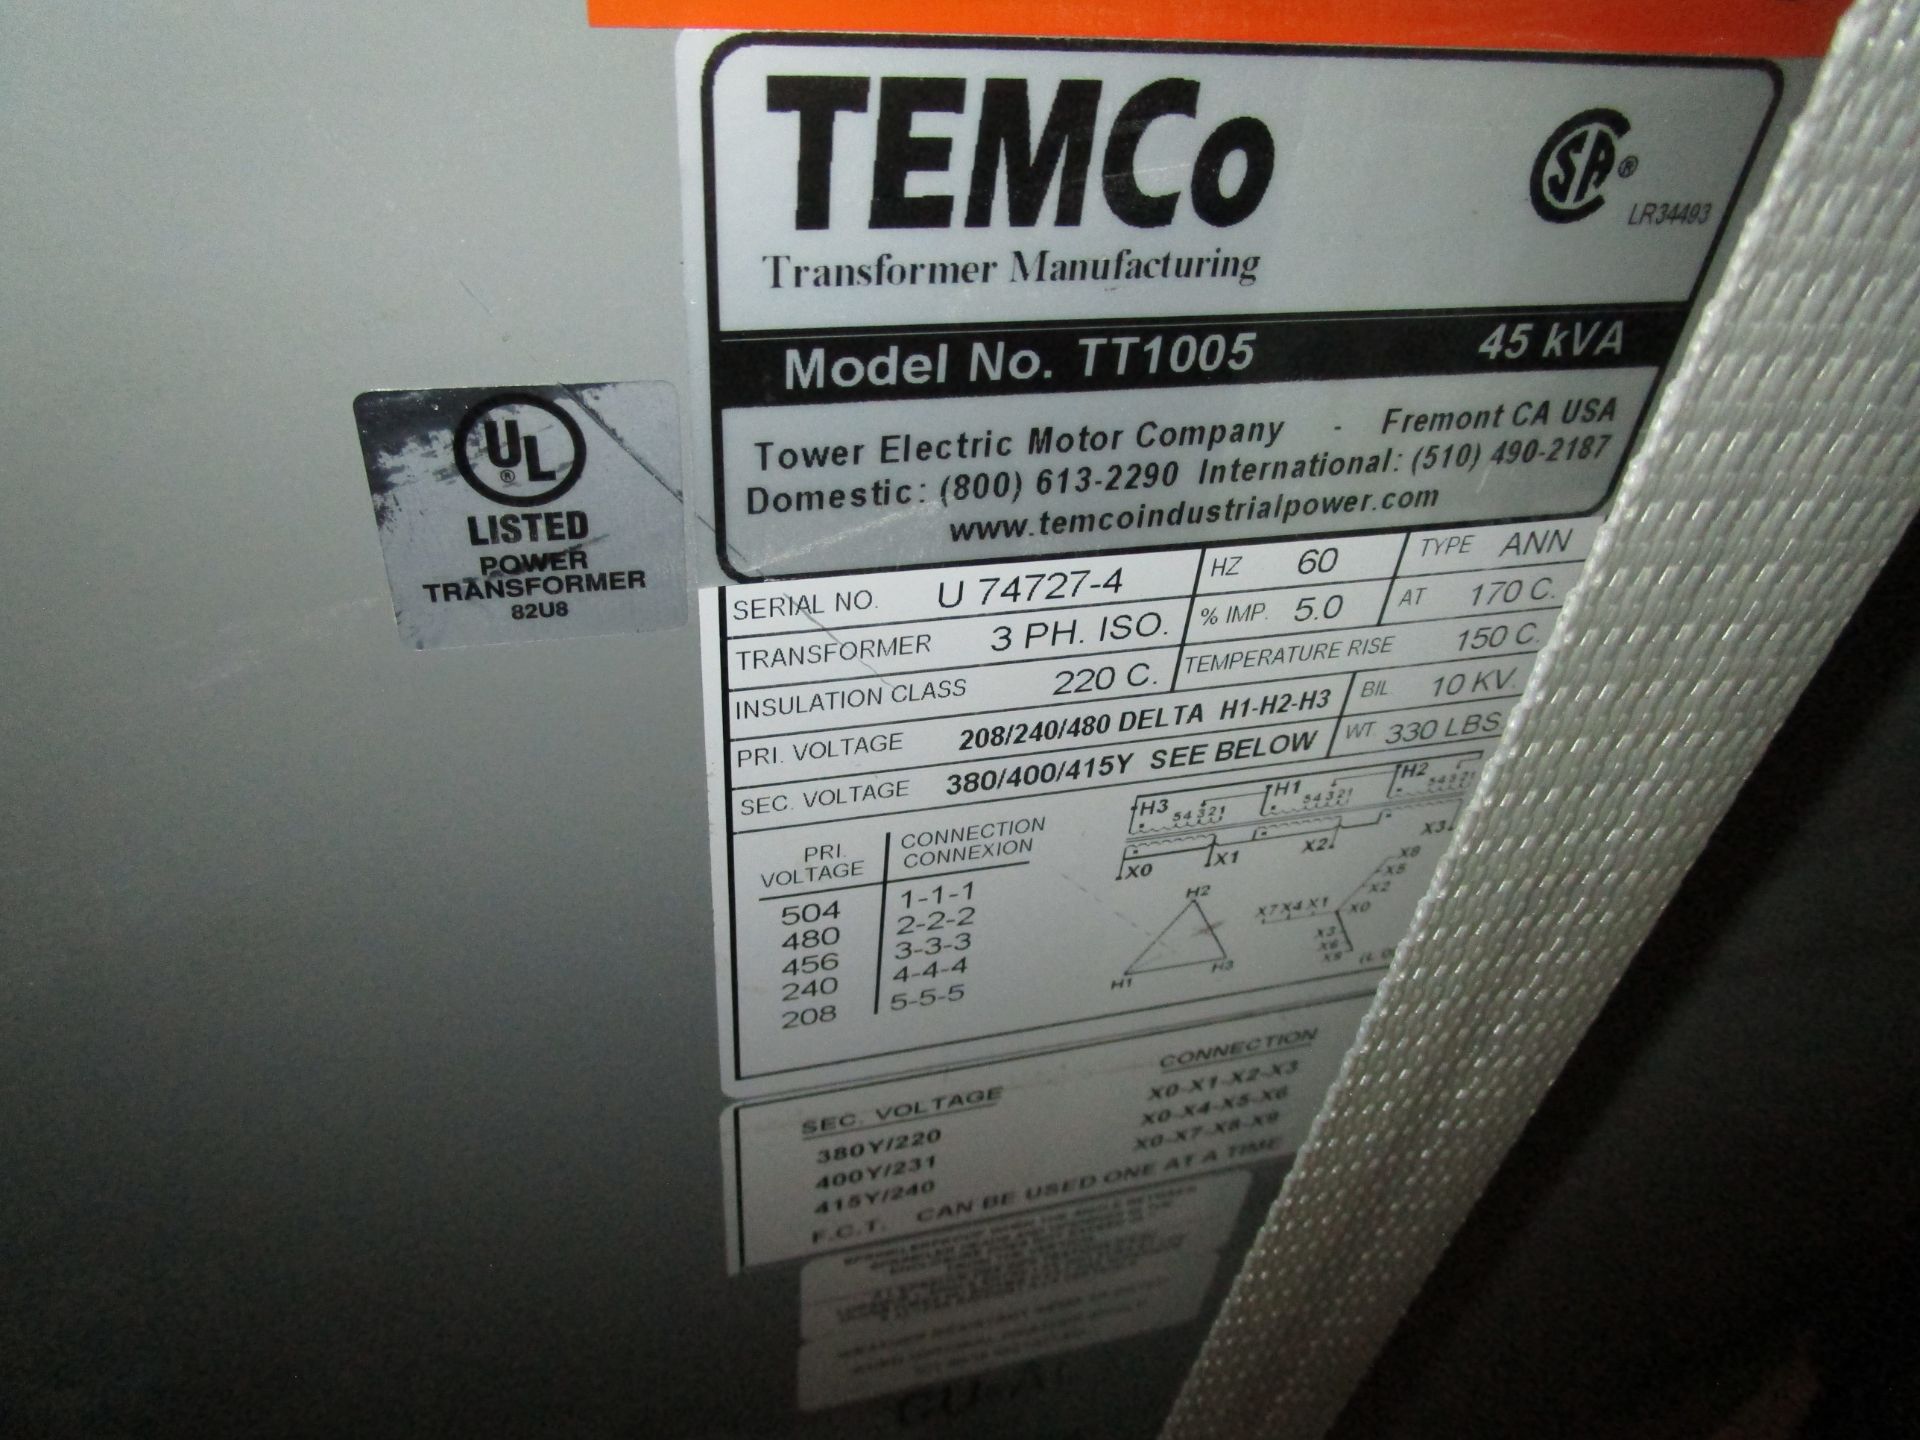 Temco TT1005 45 KVA Transformer s/n U74727-4 - Image 2 of 2